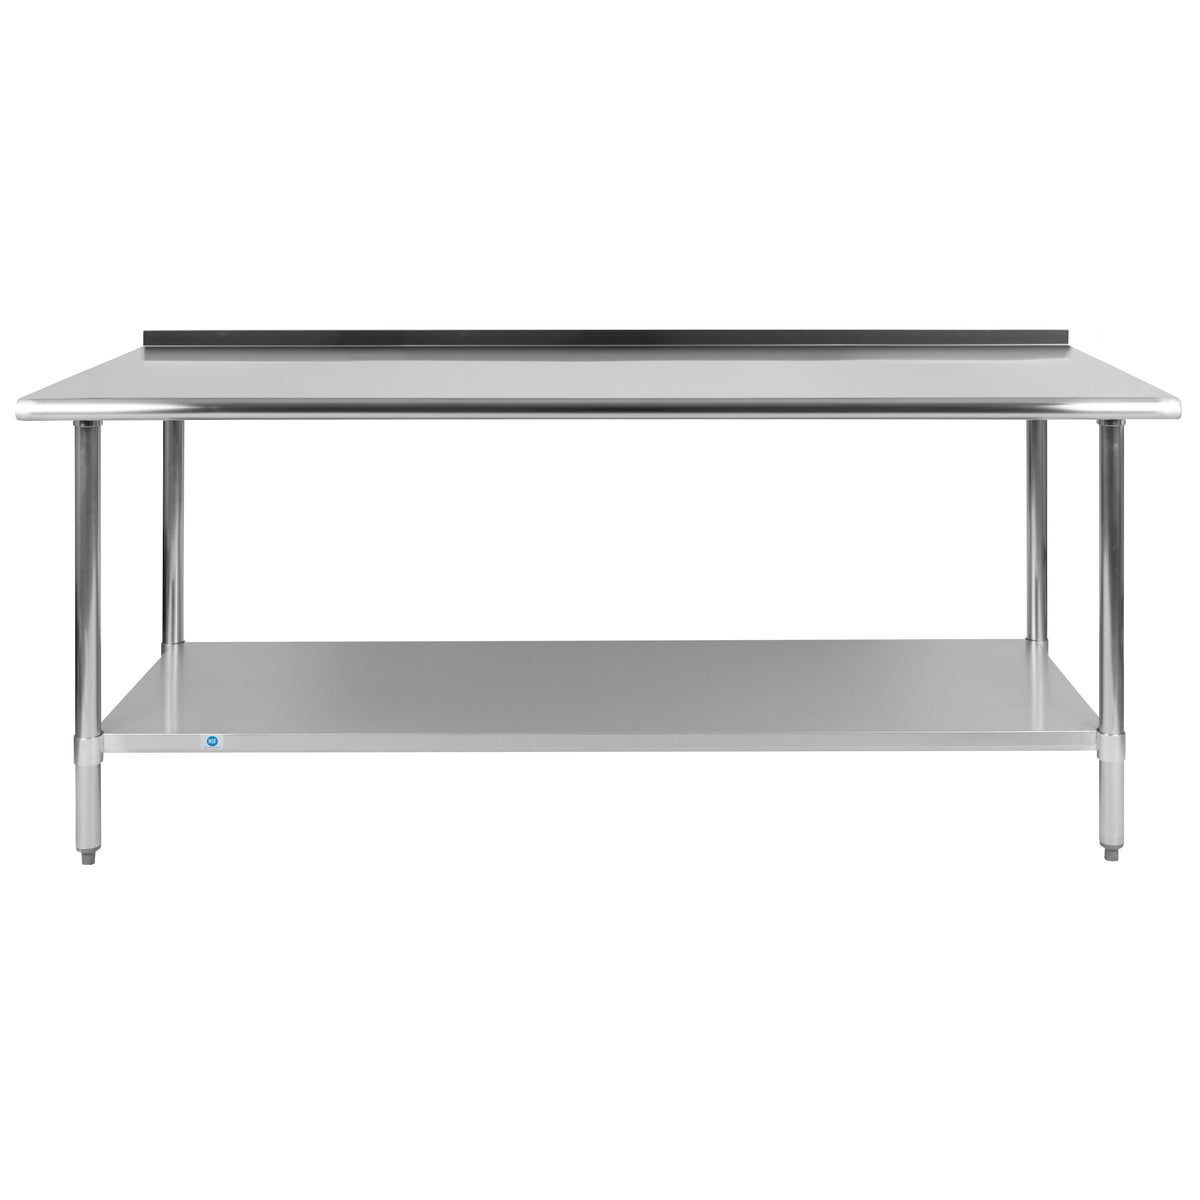 72"W x 30"D |#| Stainless Steel 18 Gauge Work Table with Backsplash and Shelf, NSF - 72"W x 30"D